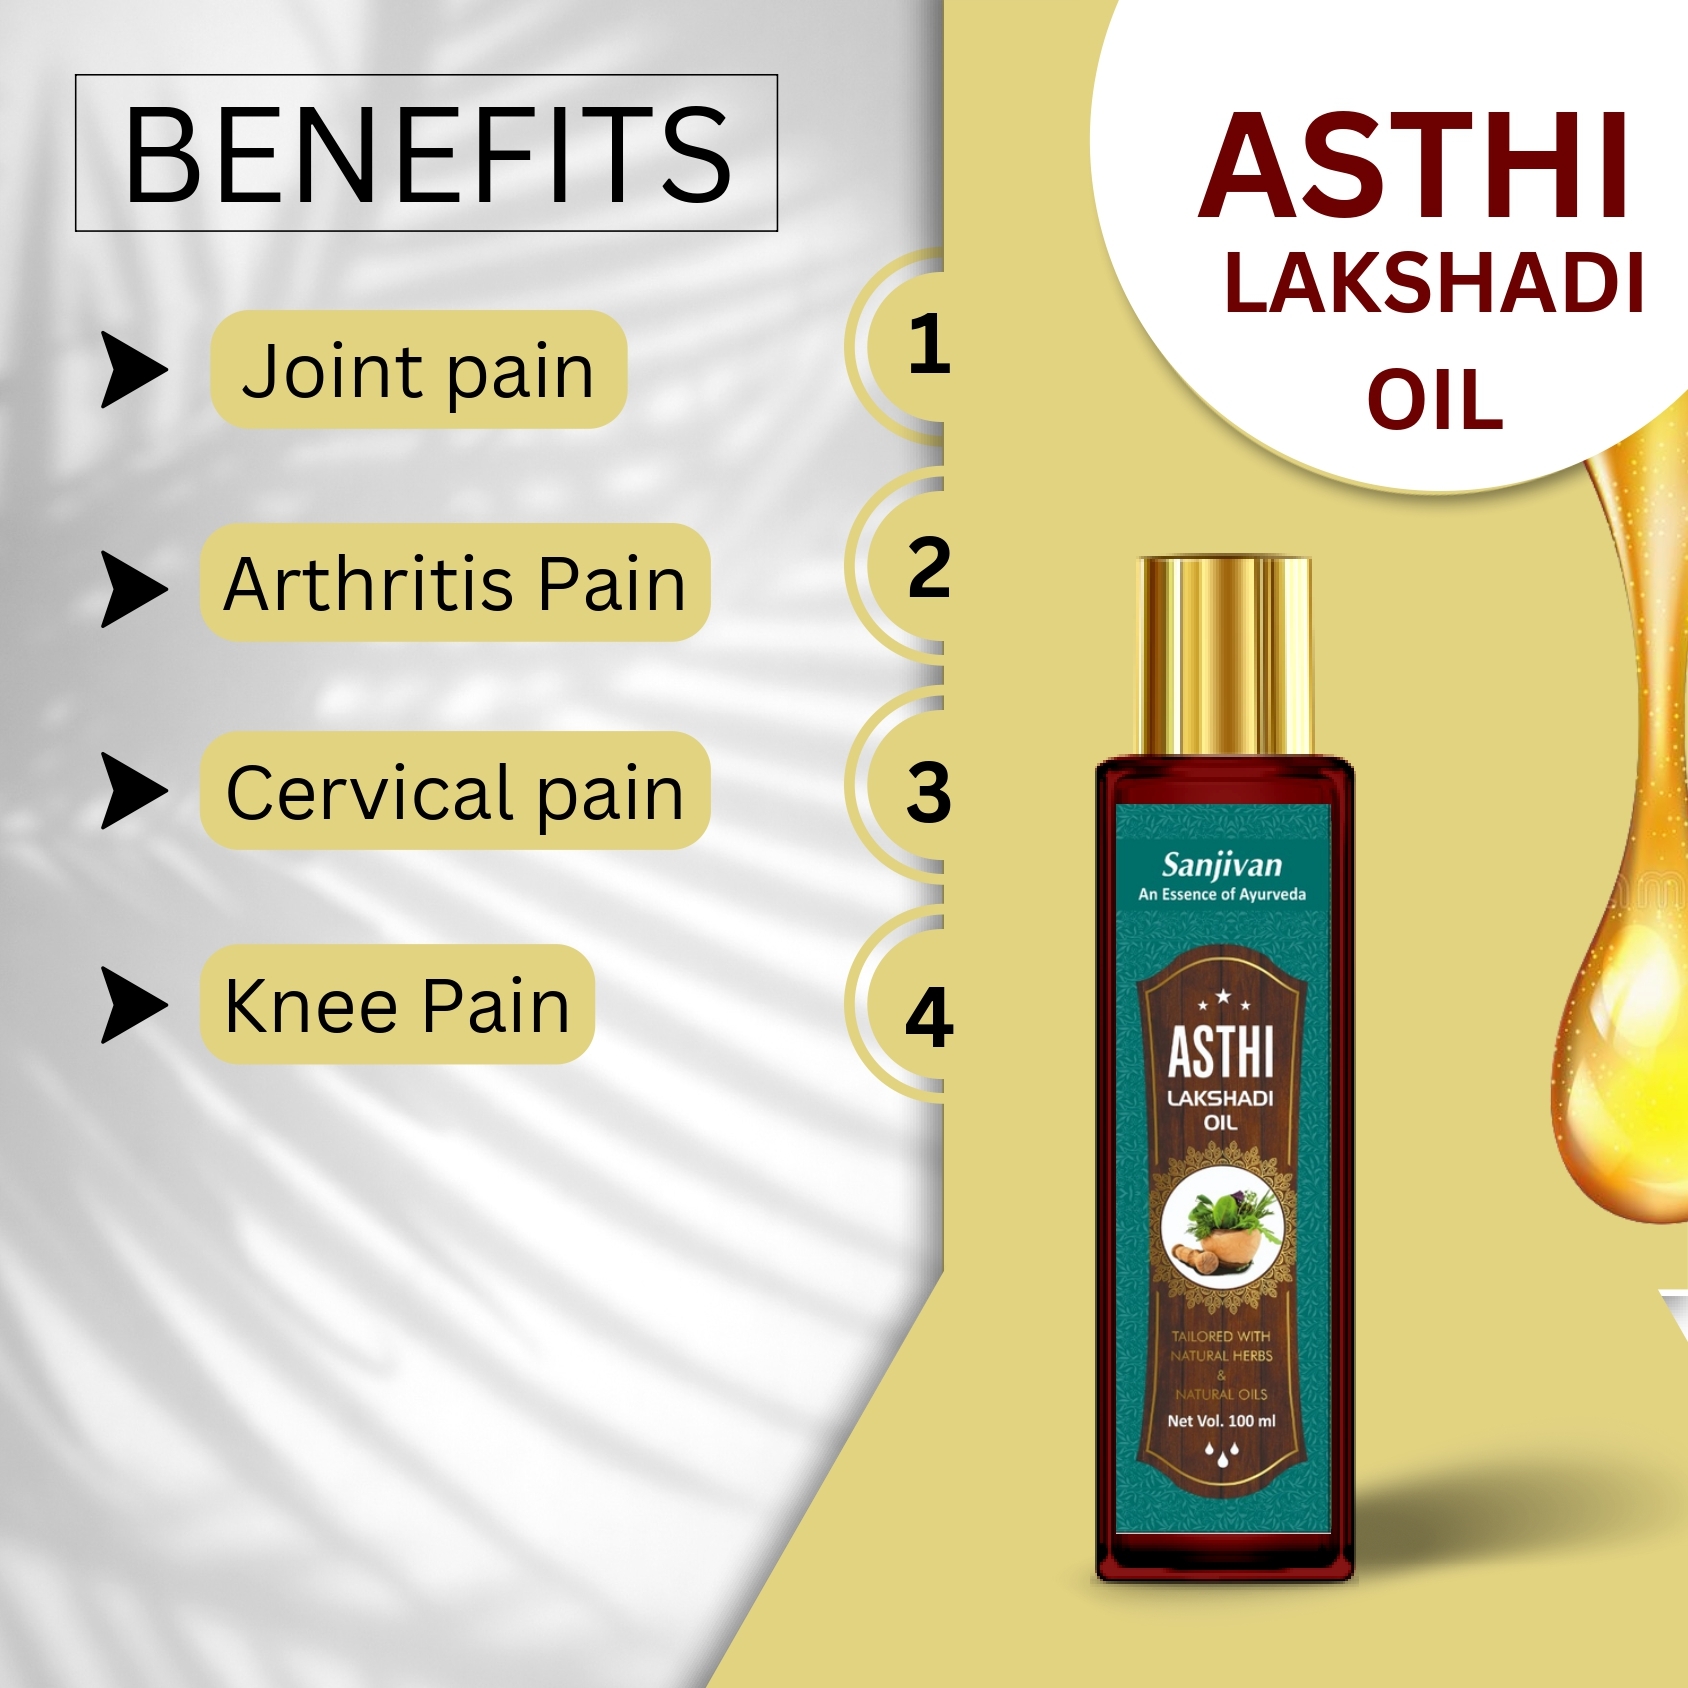 Asthi Lakshadi Oil